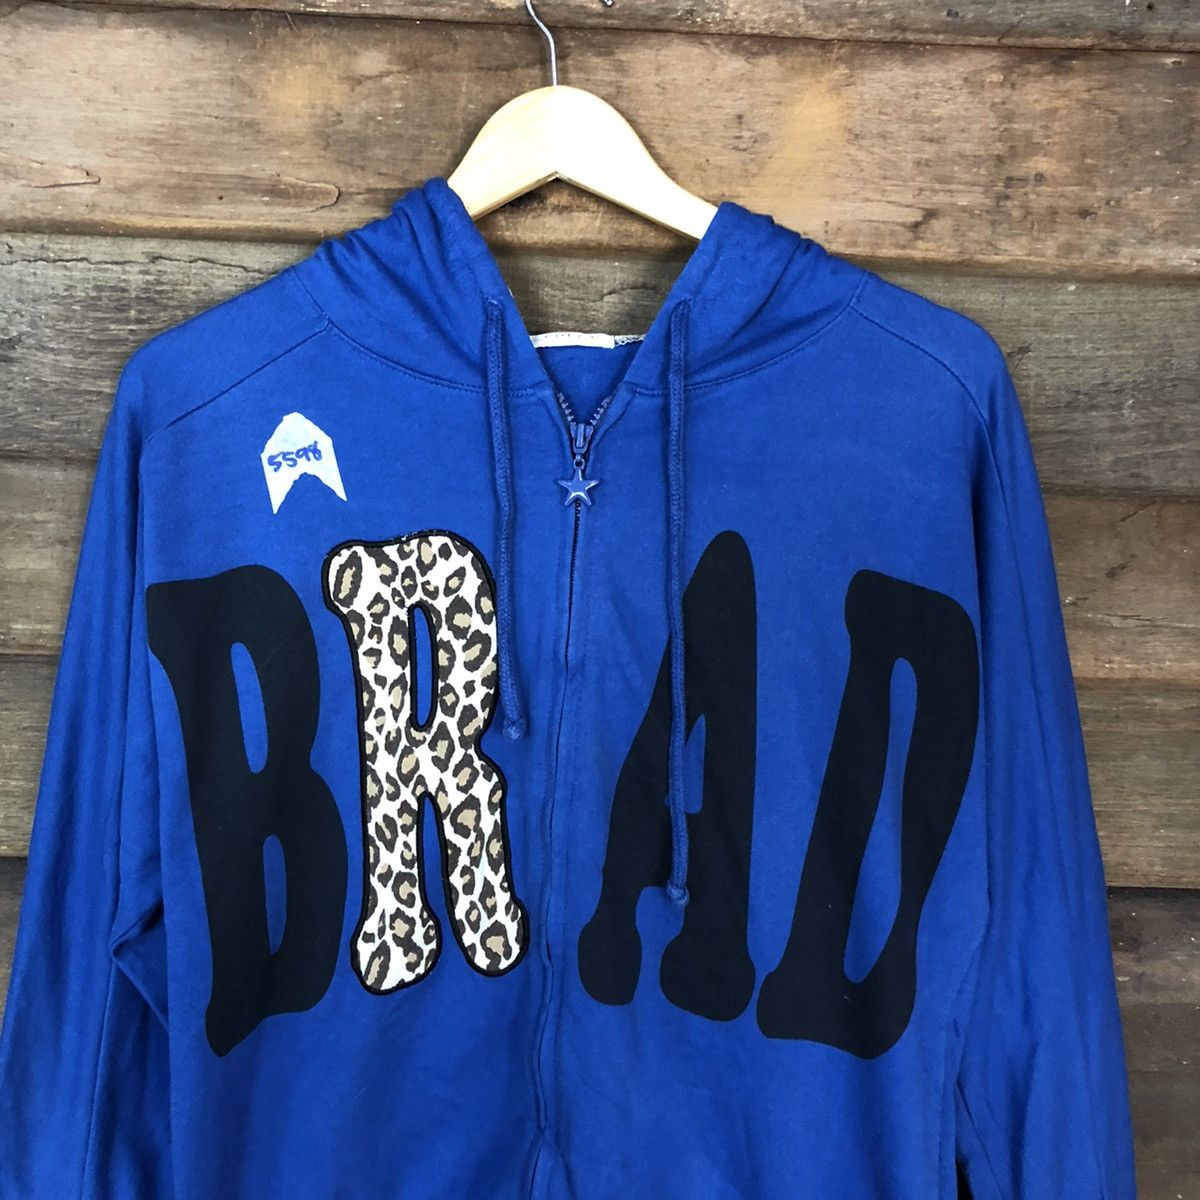 Japanese Brand Colza Brad Blue sweater ear Hoodies #5598 Size S / US 4 / IT 40 - 10 Thumbnail